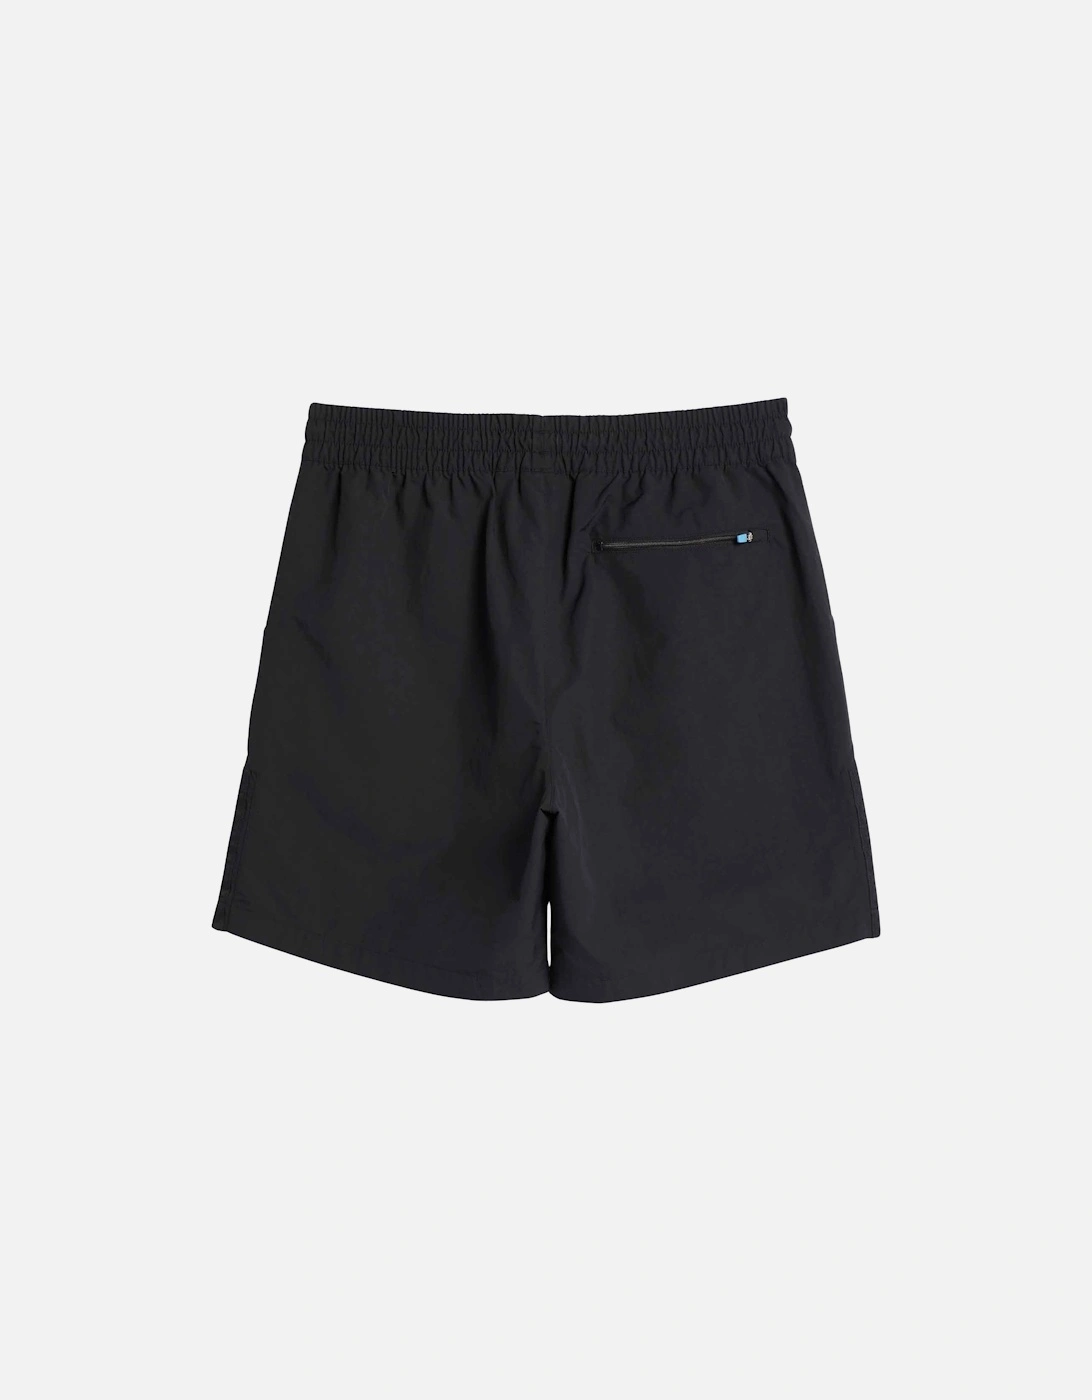 Water Shorts - Black